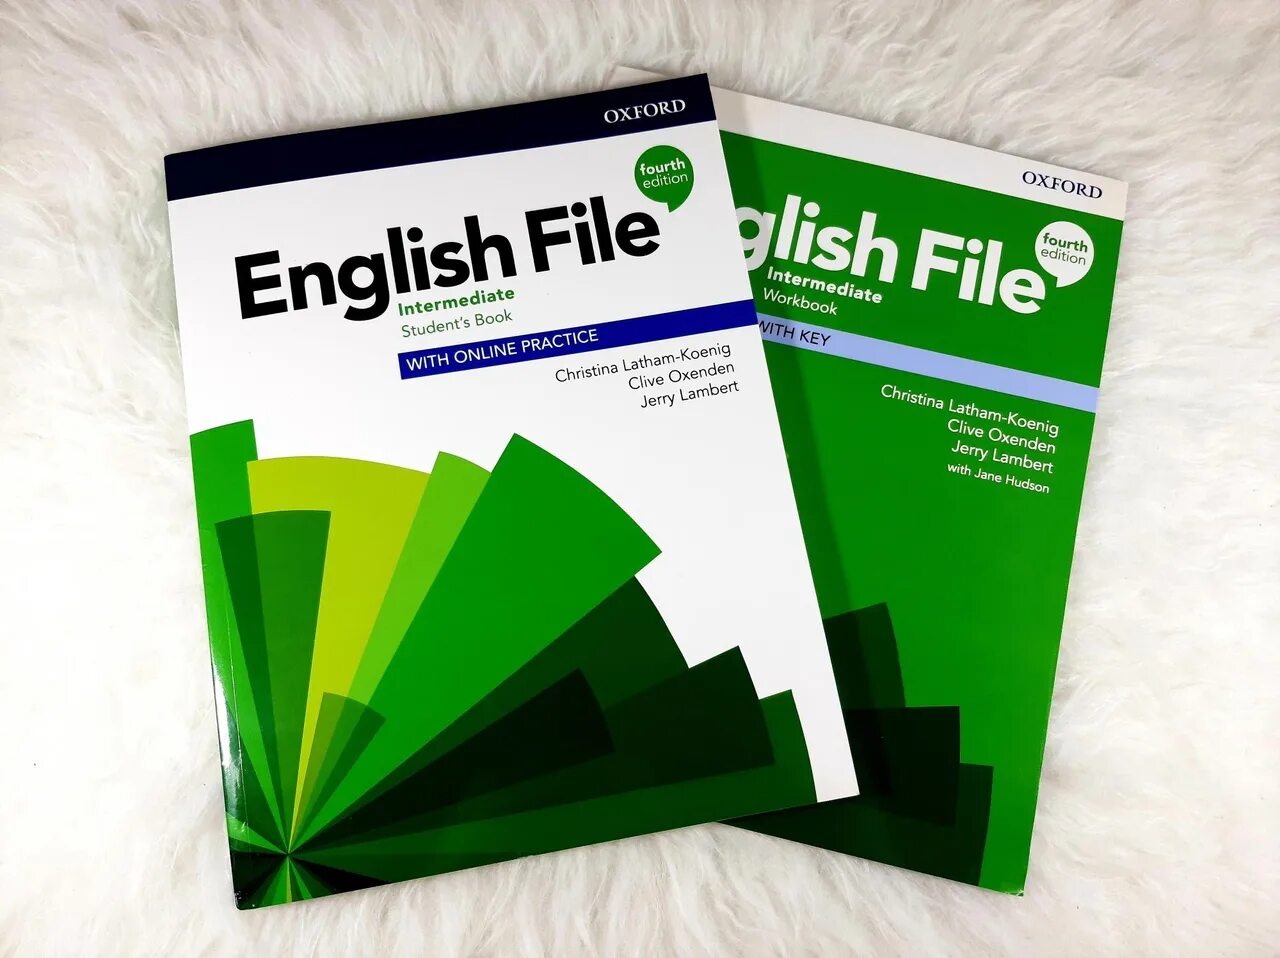 English file 4th edition students book. Инглиш файл интермедиат 4 издание. English file. Intermediate. English file 4th Edition. English file pre Intermediate 4th Edition.